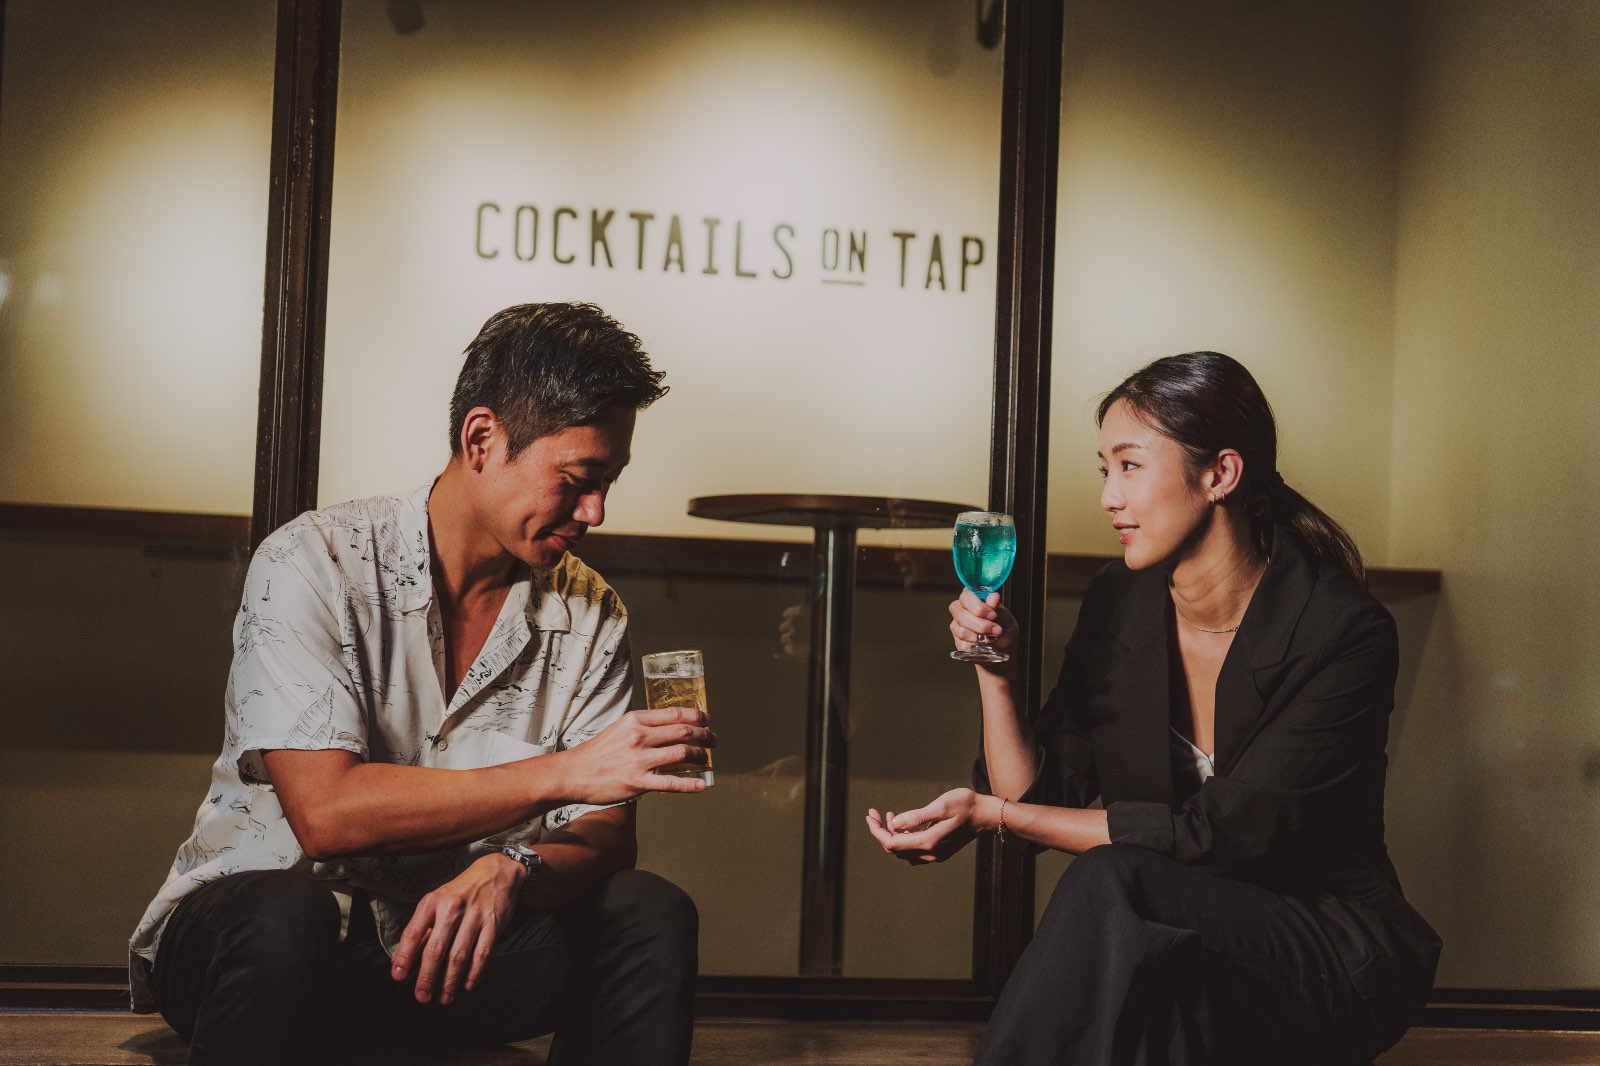 , Not shaken or stirred: Taiwan’s Draft Land brings cocktails on tap to Singapore